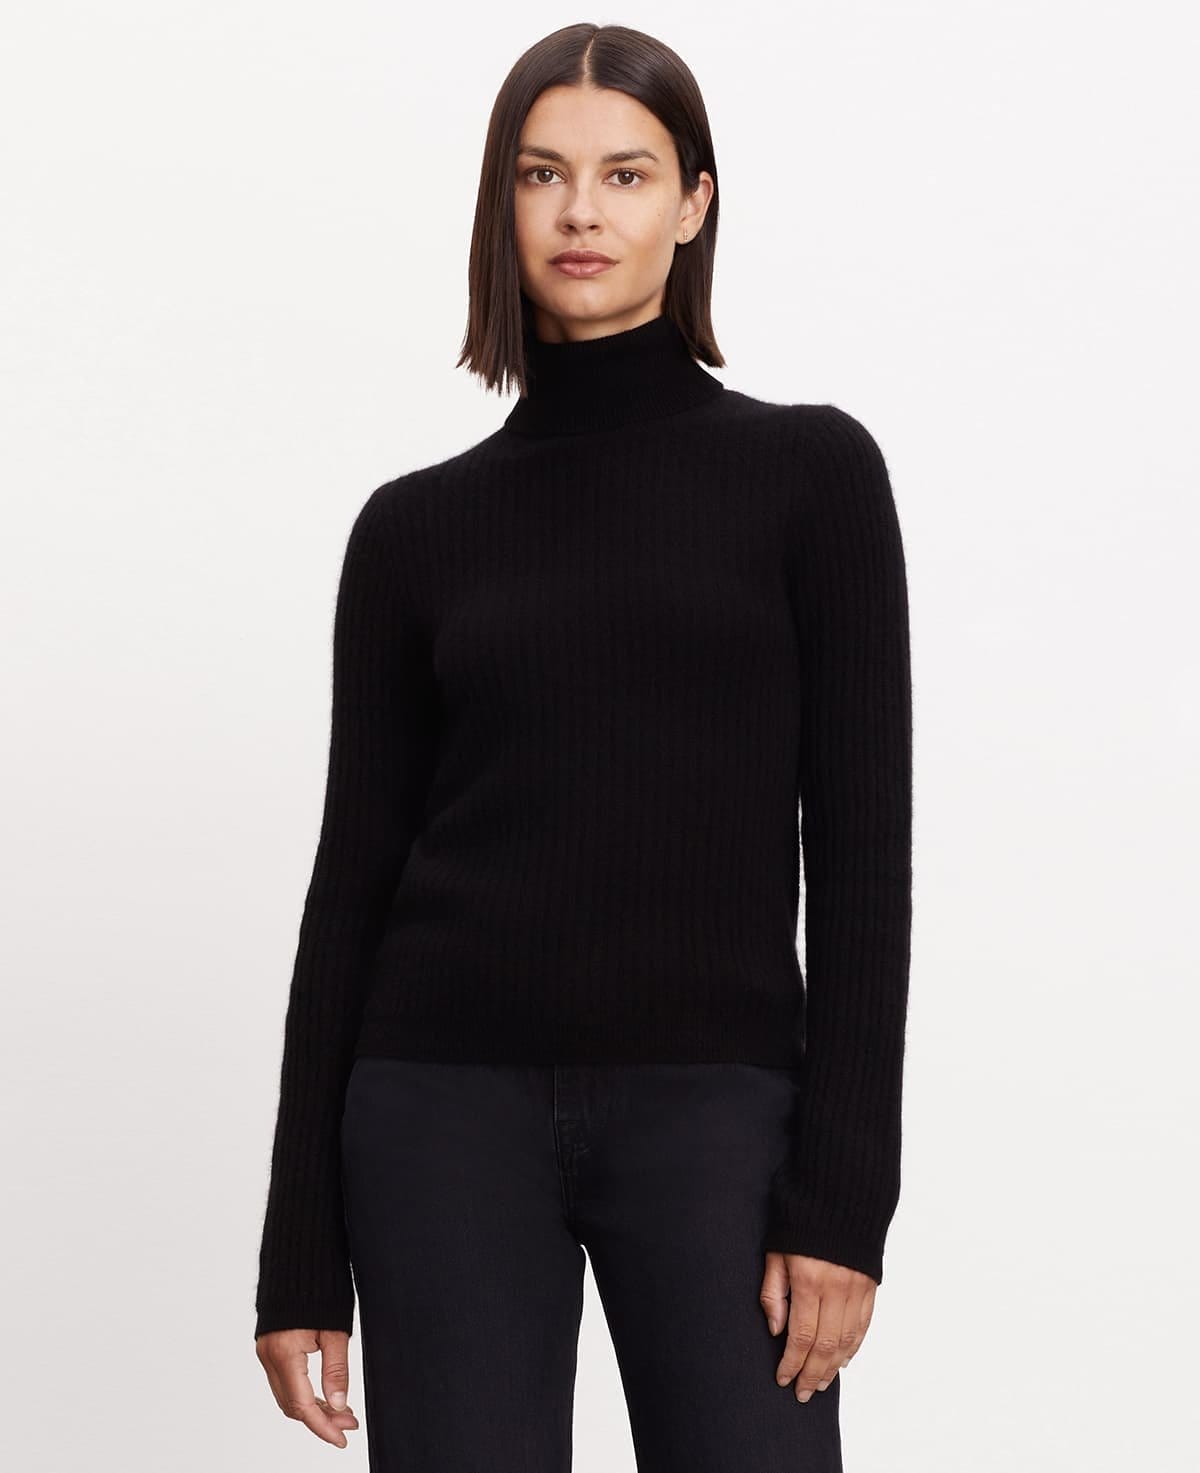 Model wearing the Lori Cashmere Turtleneck Sweater